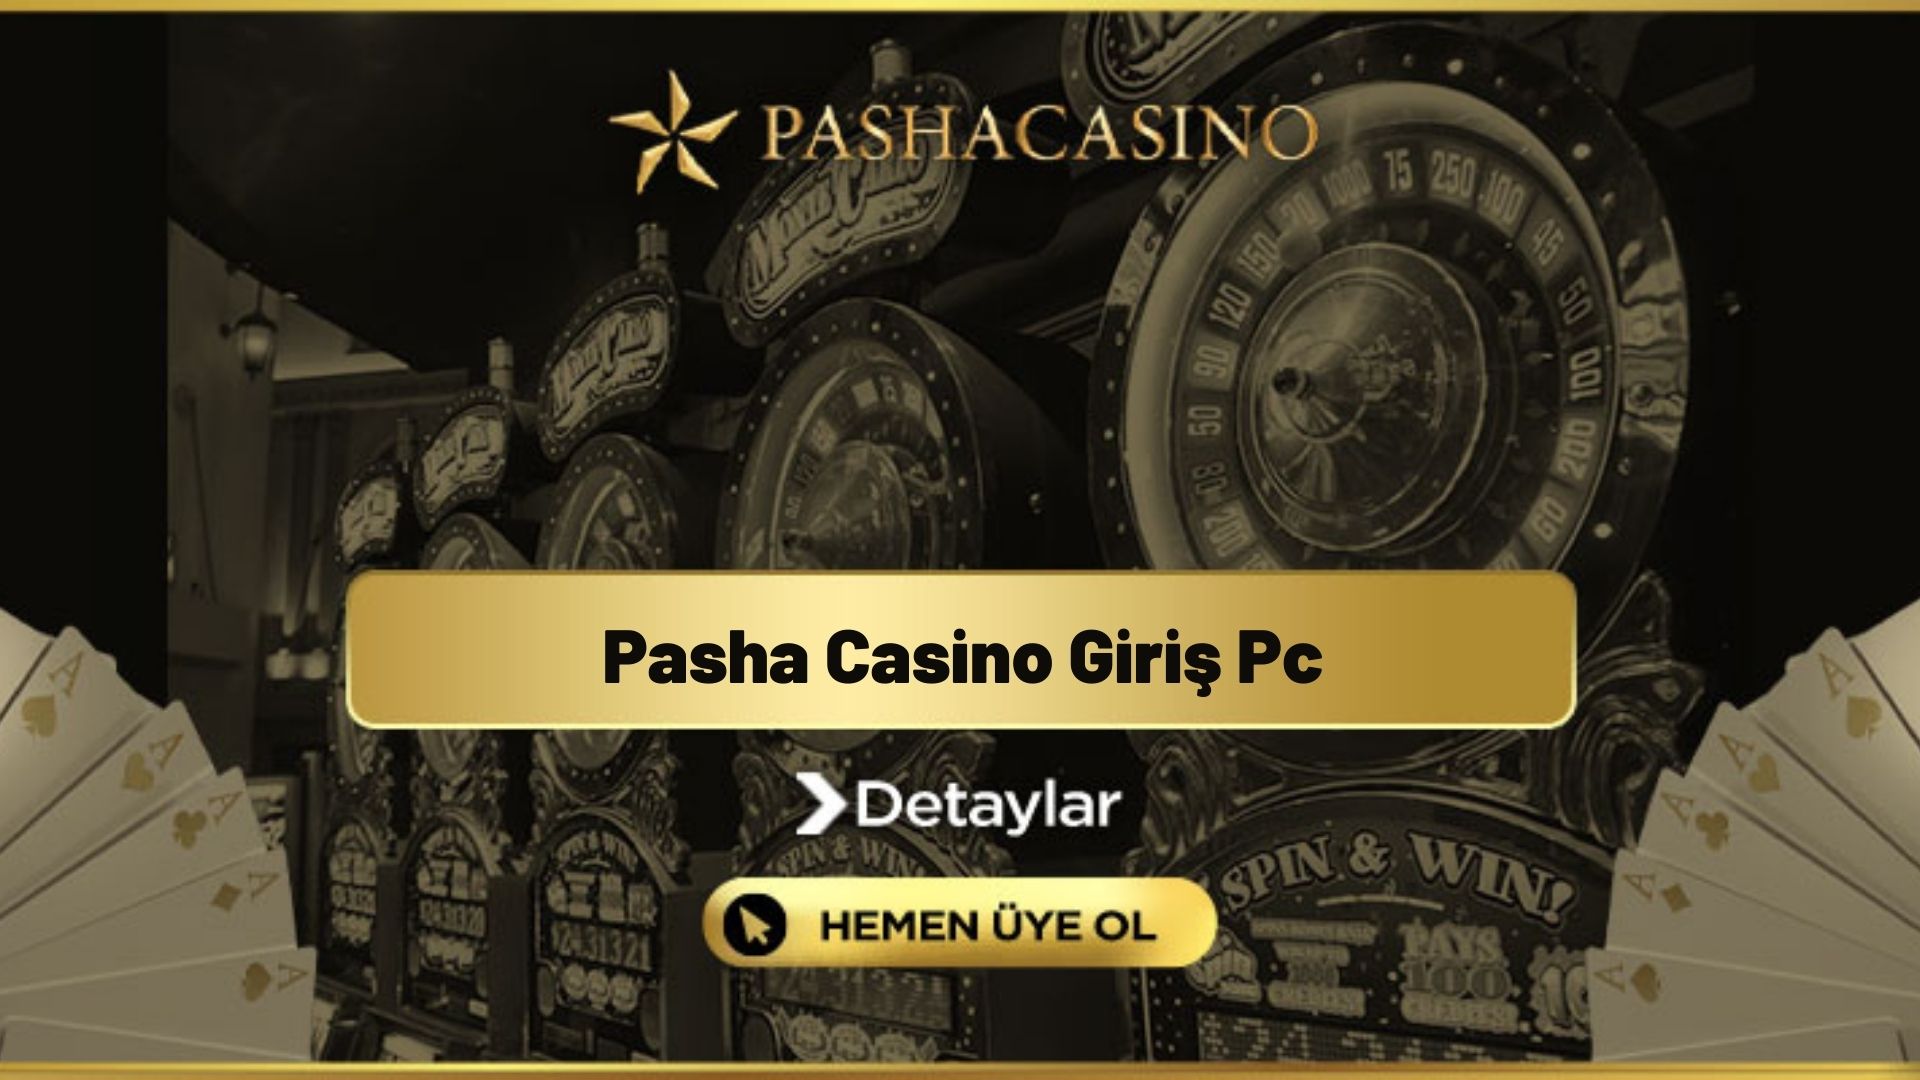 Pasha Casino Giriş Pc